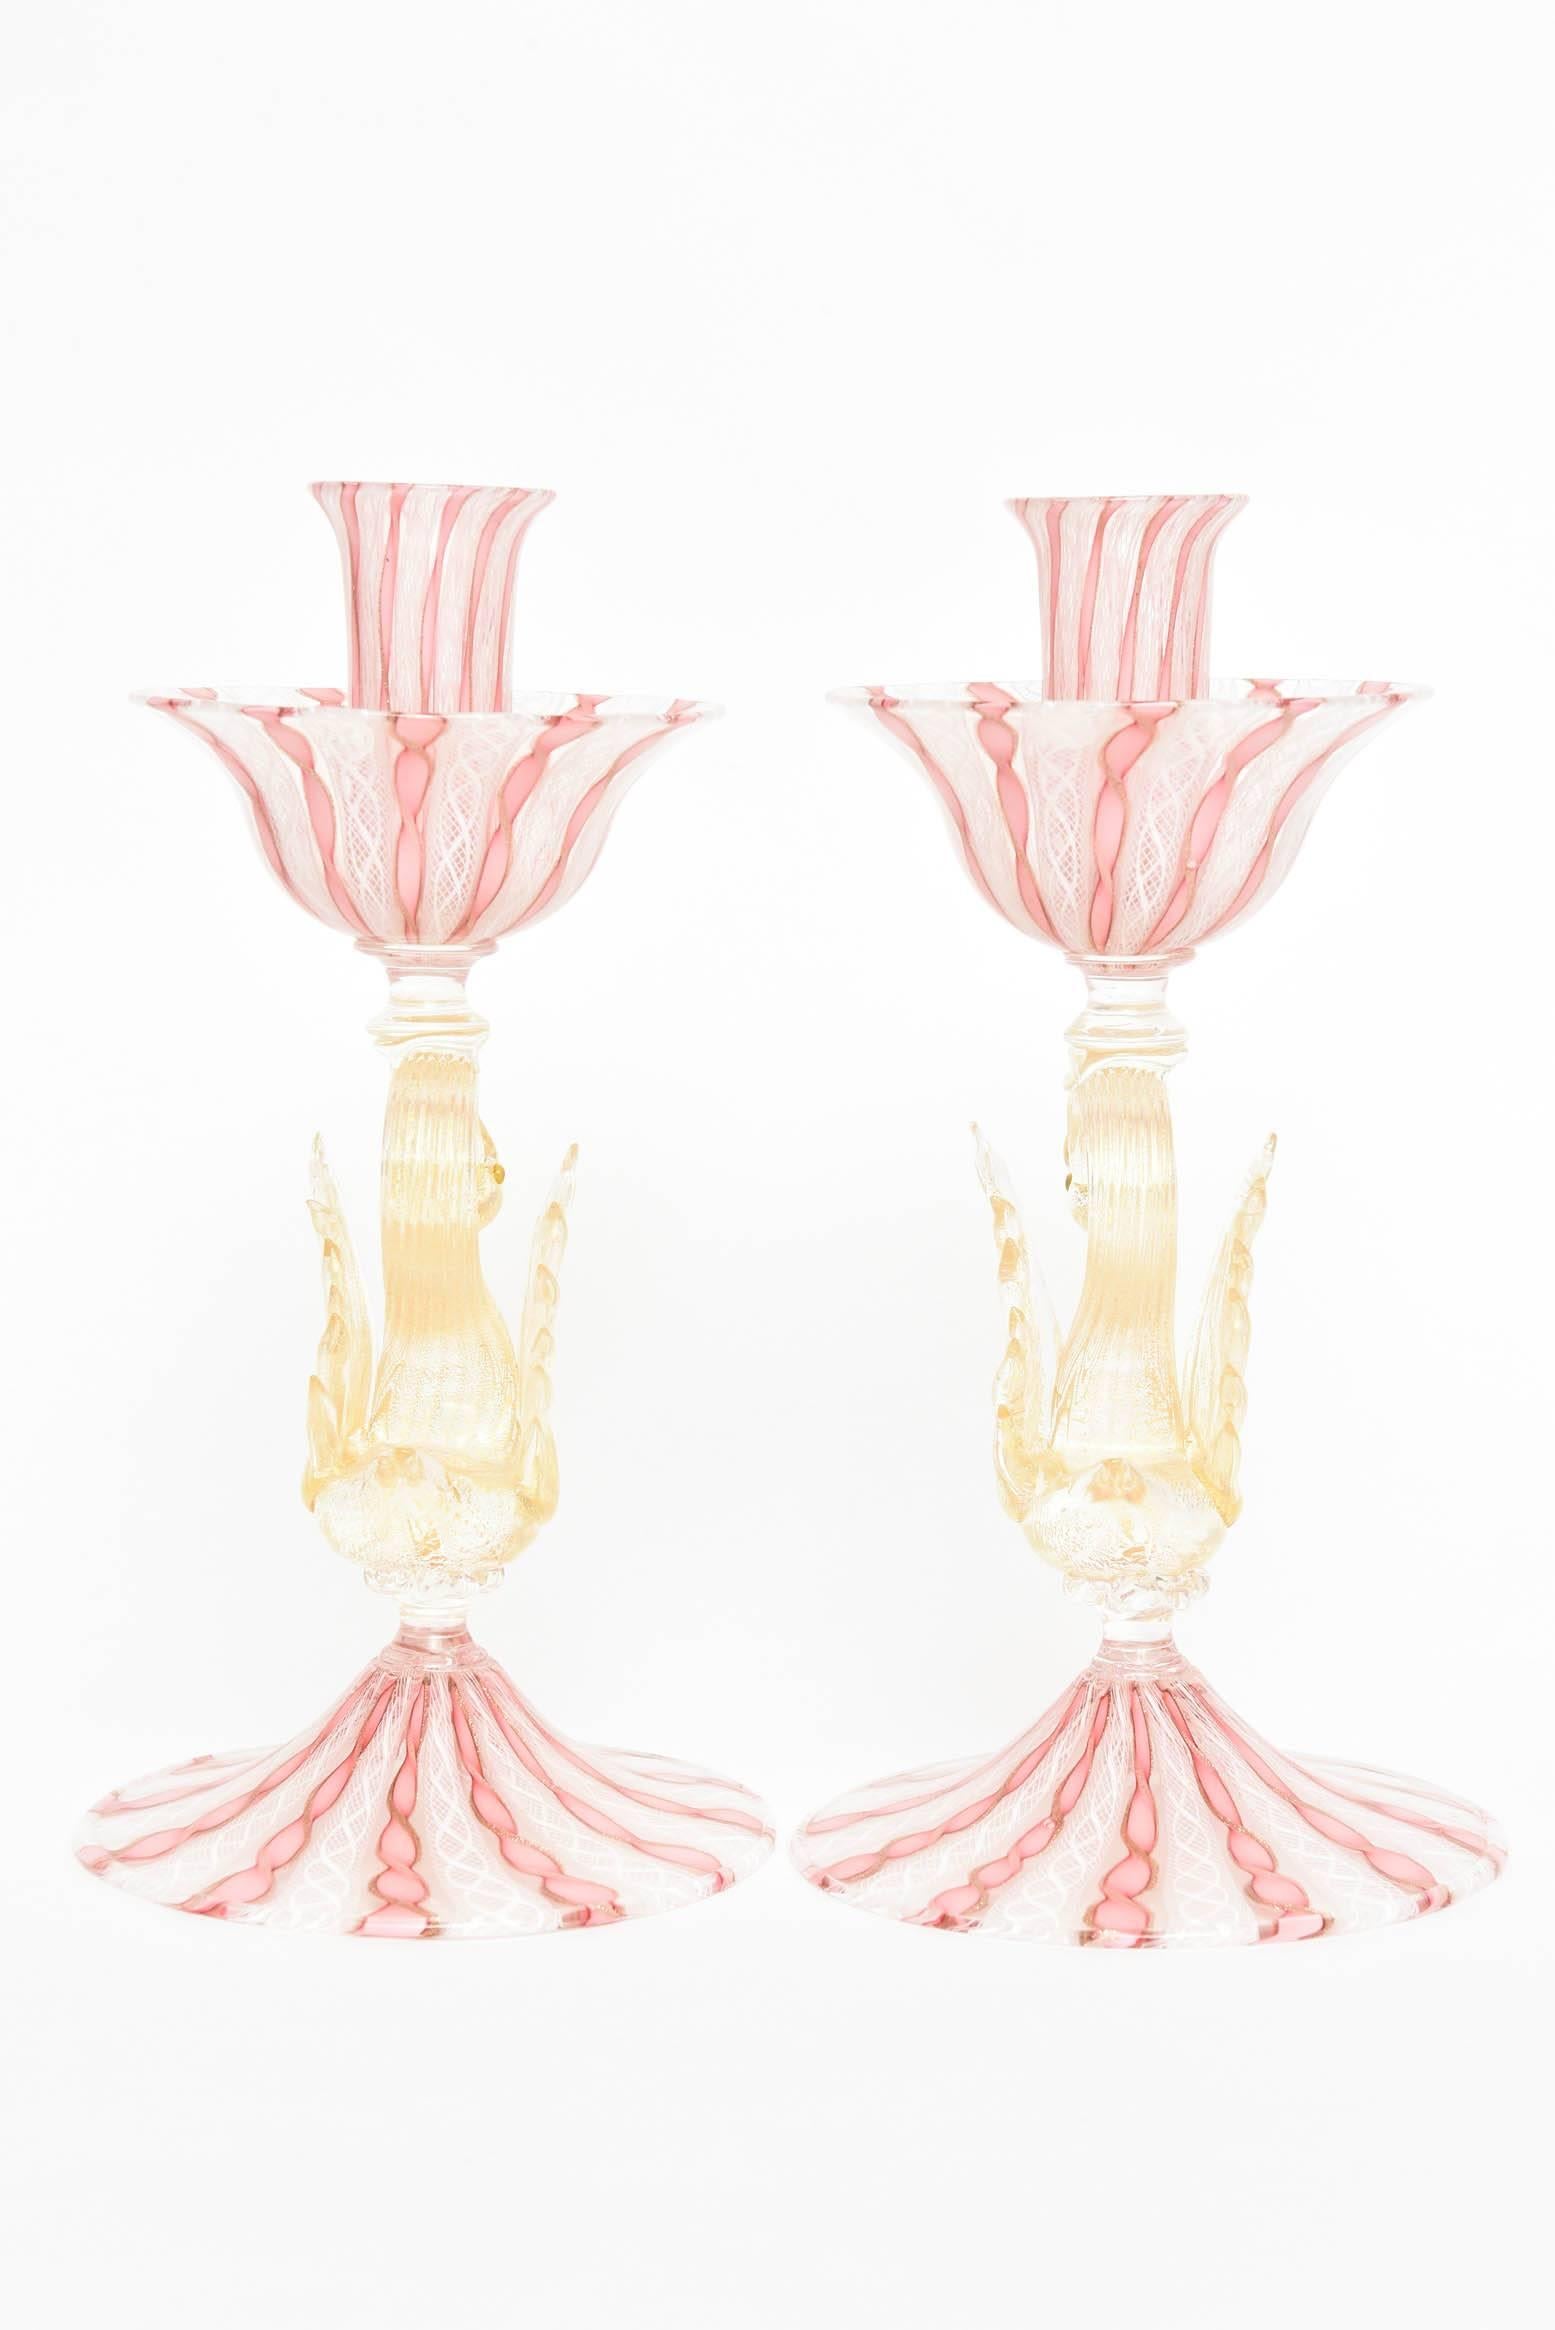 Italian Pair of Venetian Pink White with Figural Swan Candlesticks, Latticino Swirls